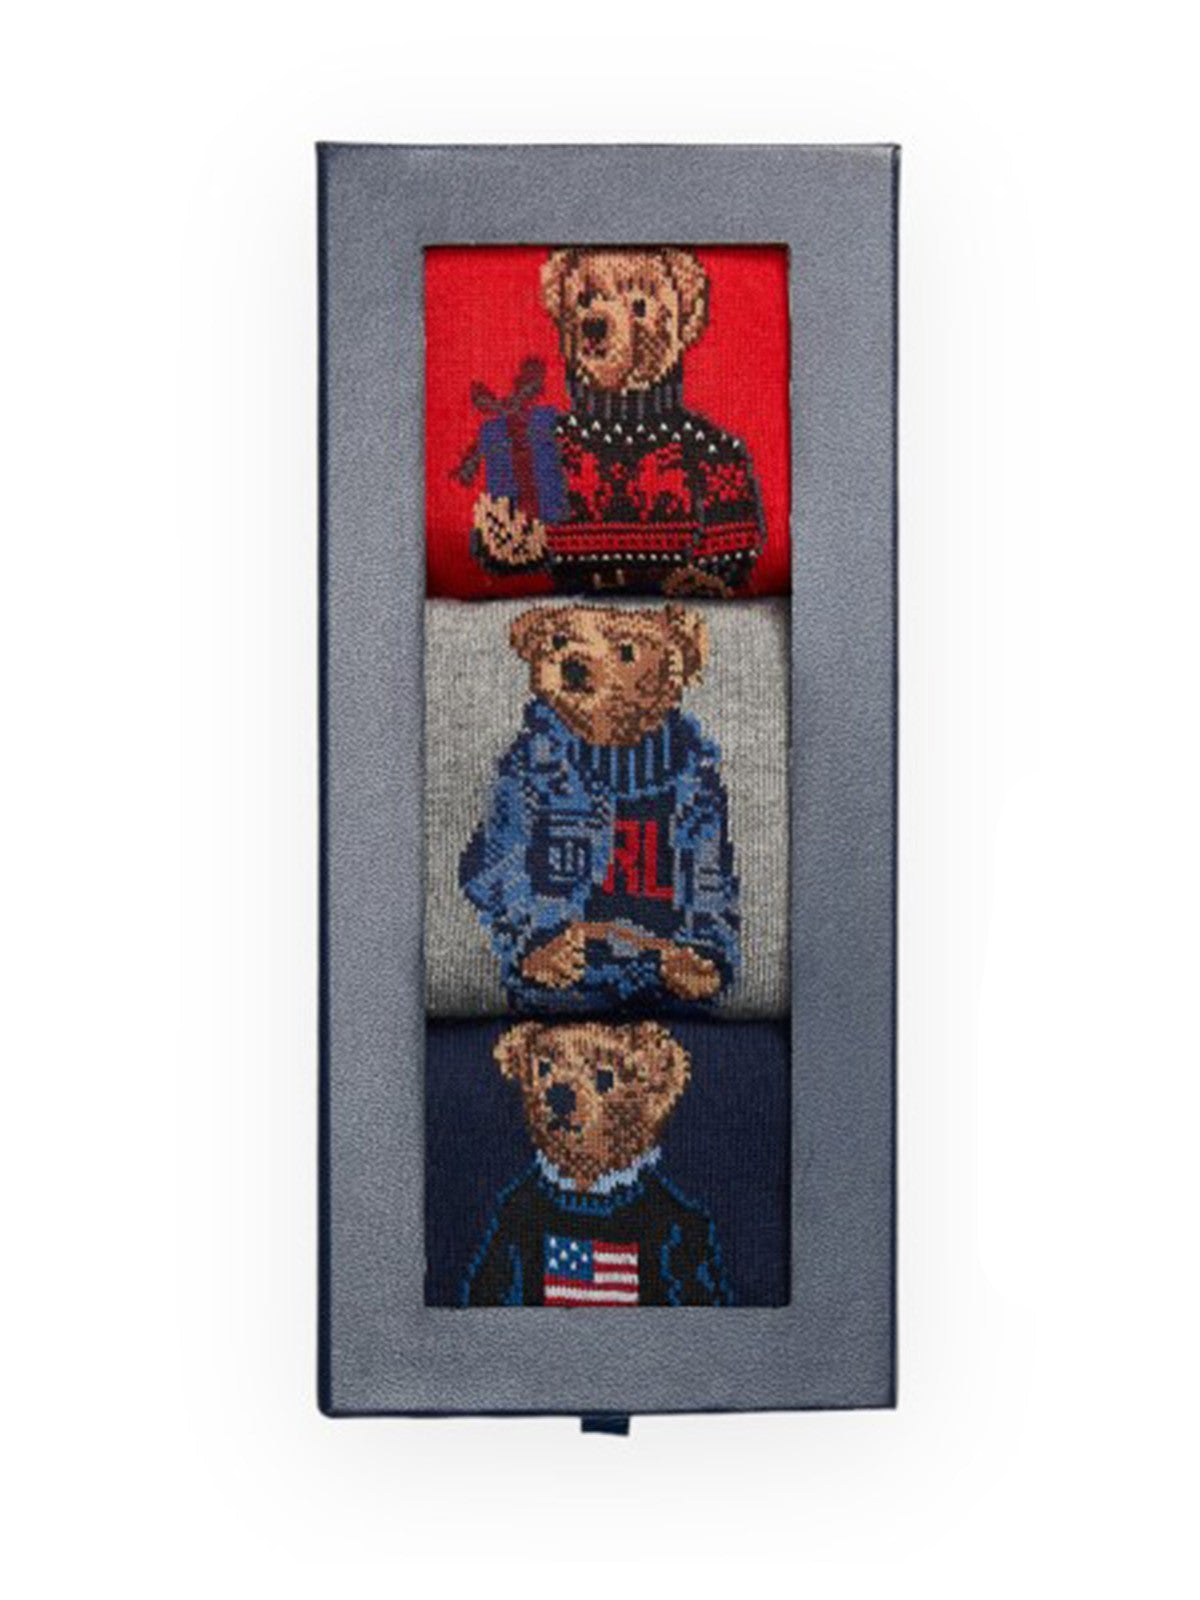 Calze Uomo Ralph Lauren - Crew Sock Gift Box 4 - Multicolore